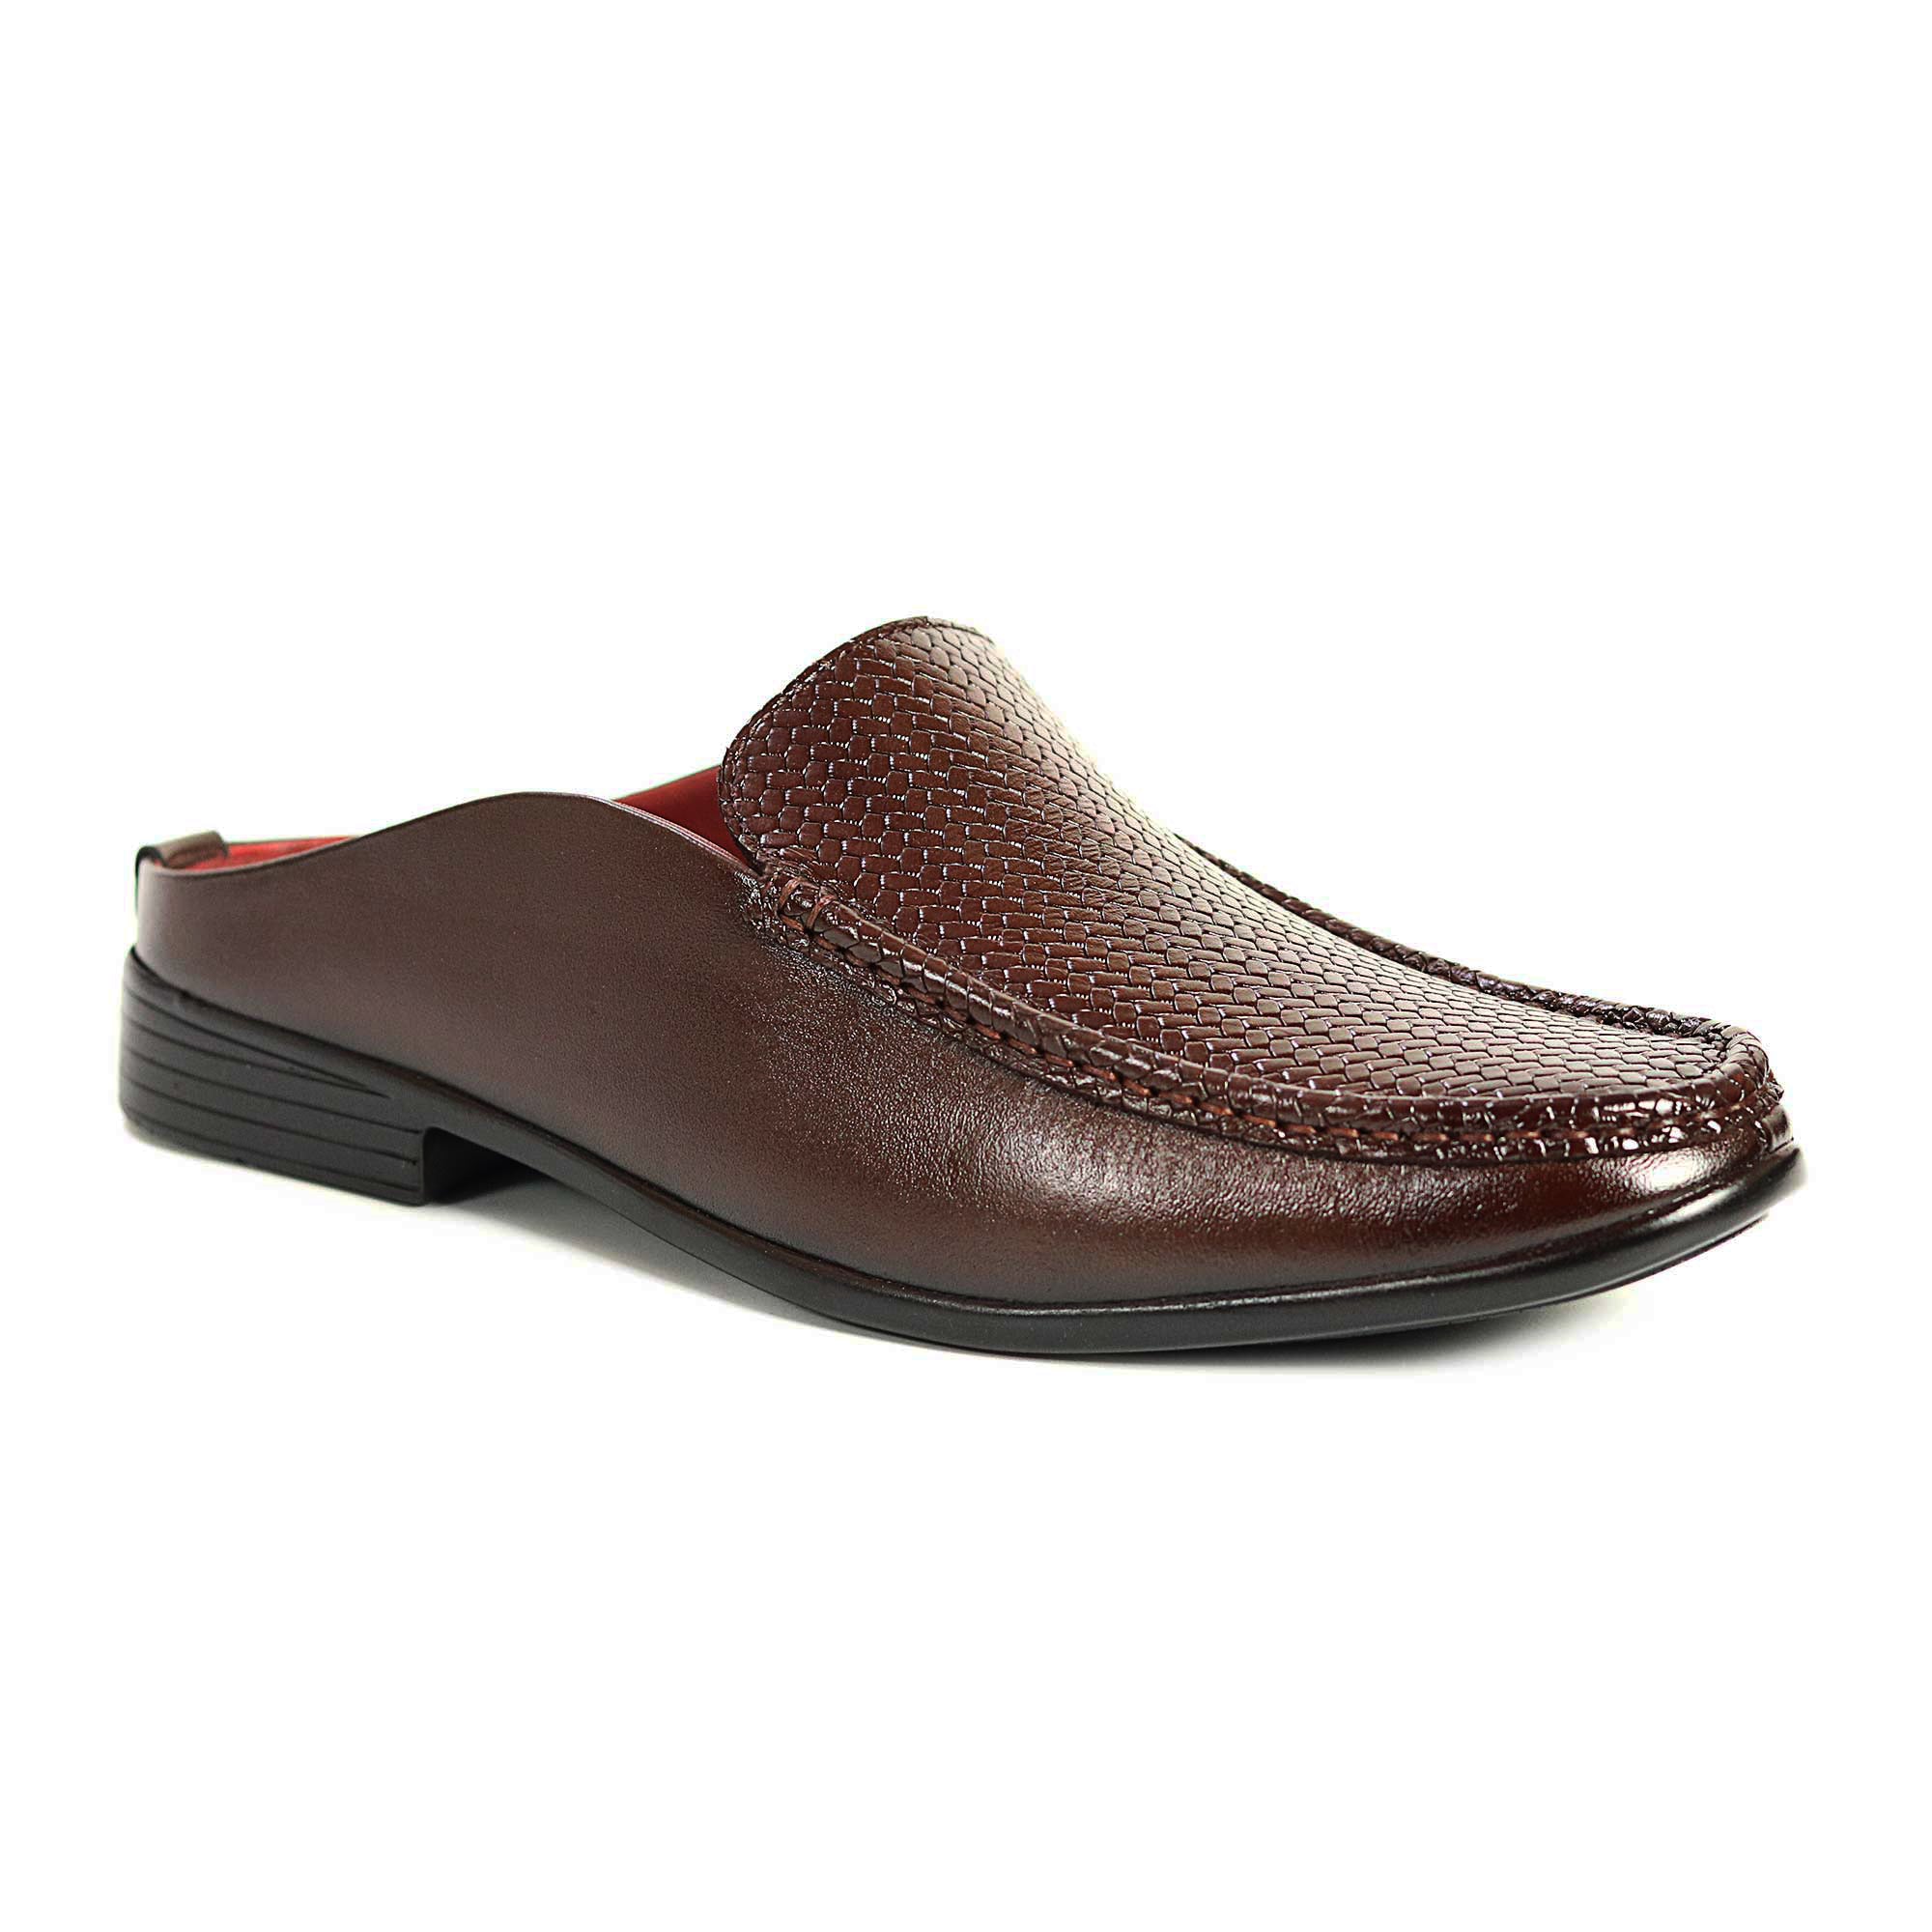 Zays Leather Premium Half Shoe For Men (Chocolate) - SF67